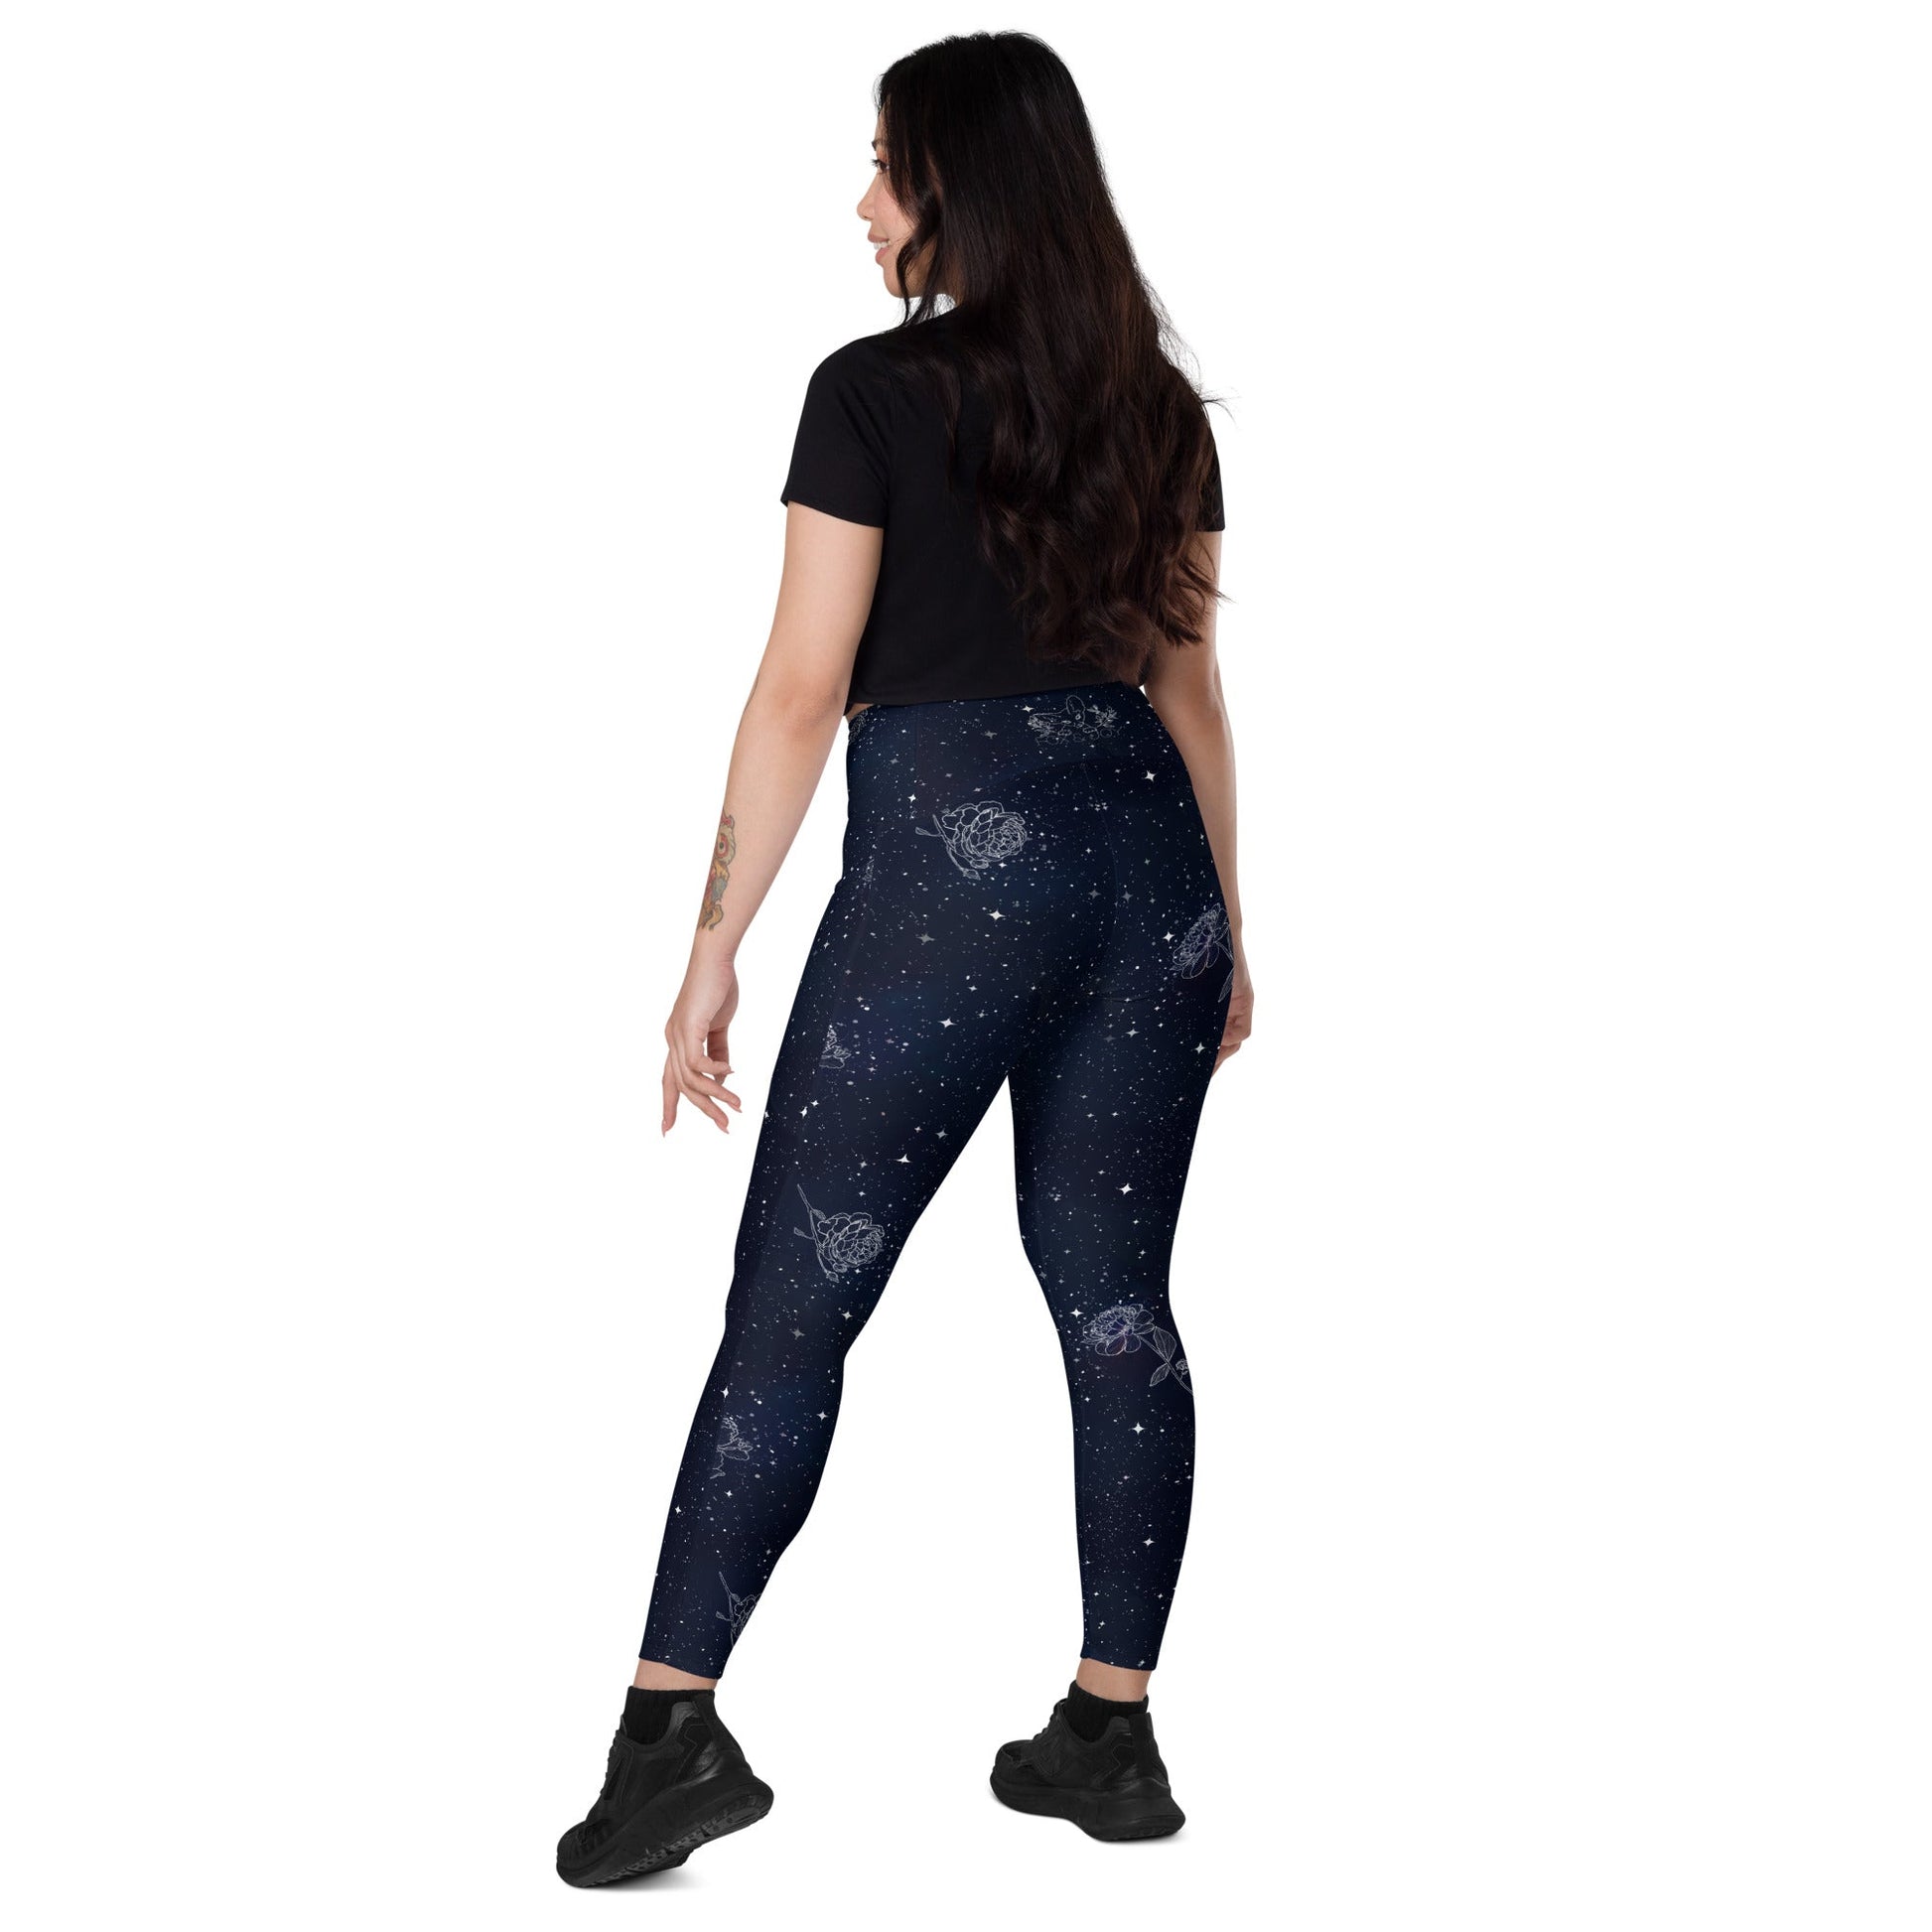 Flower Constellation Crossover leggings with pockets - Fox & Joy